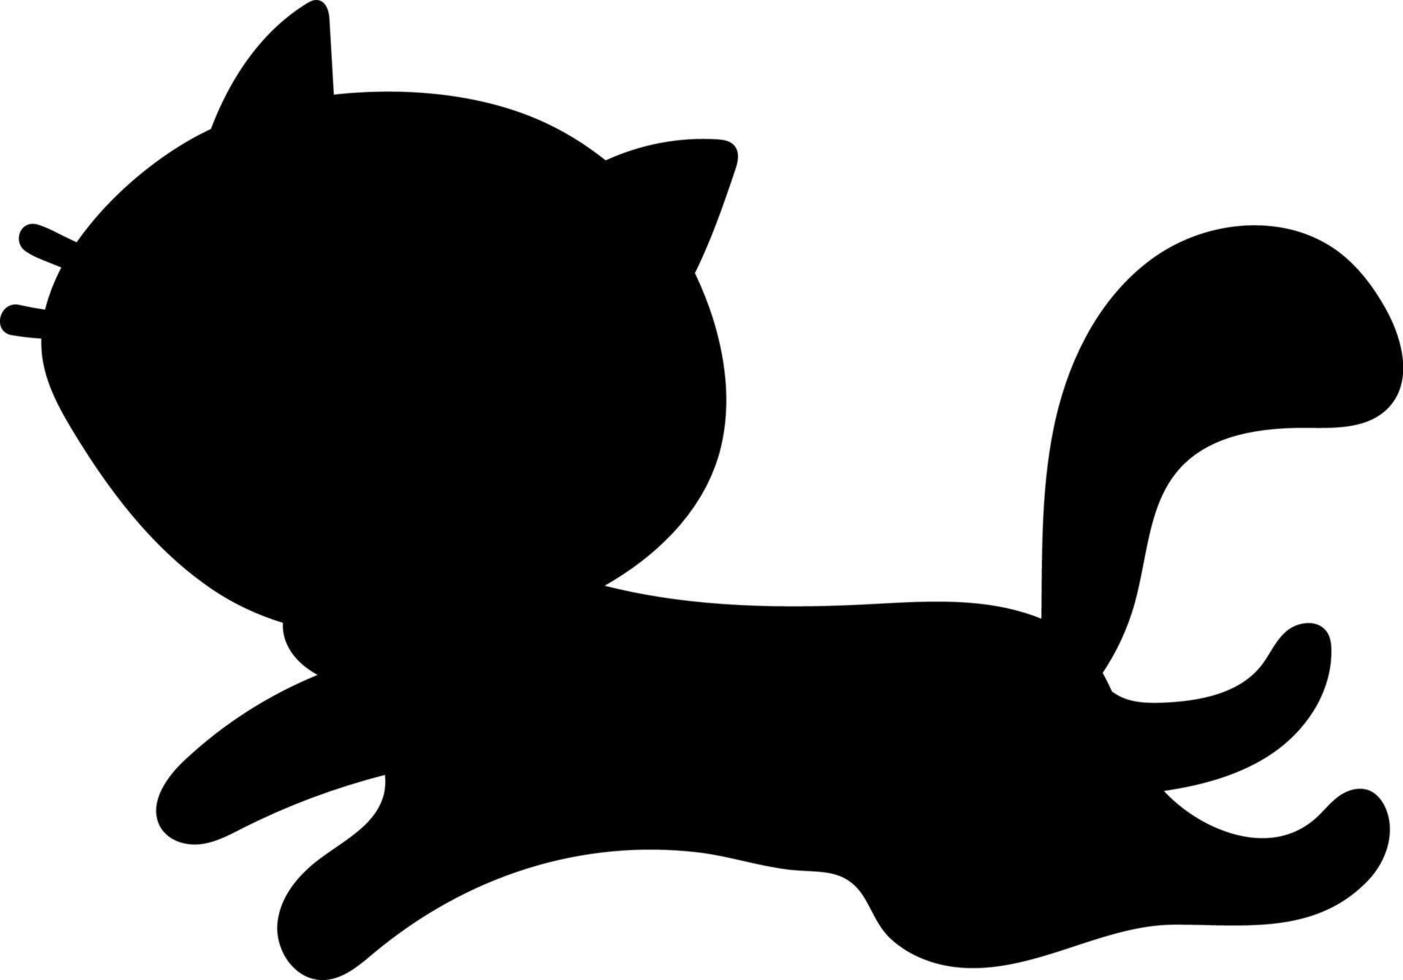 Black cat silhouette pet. vector